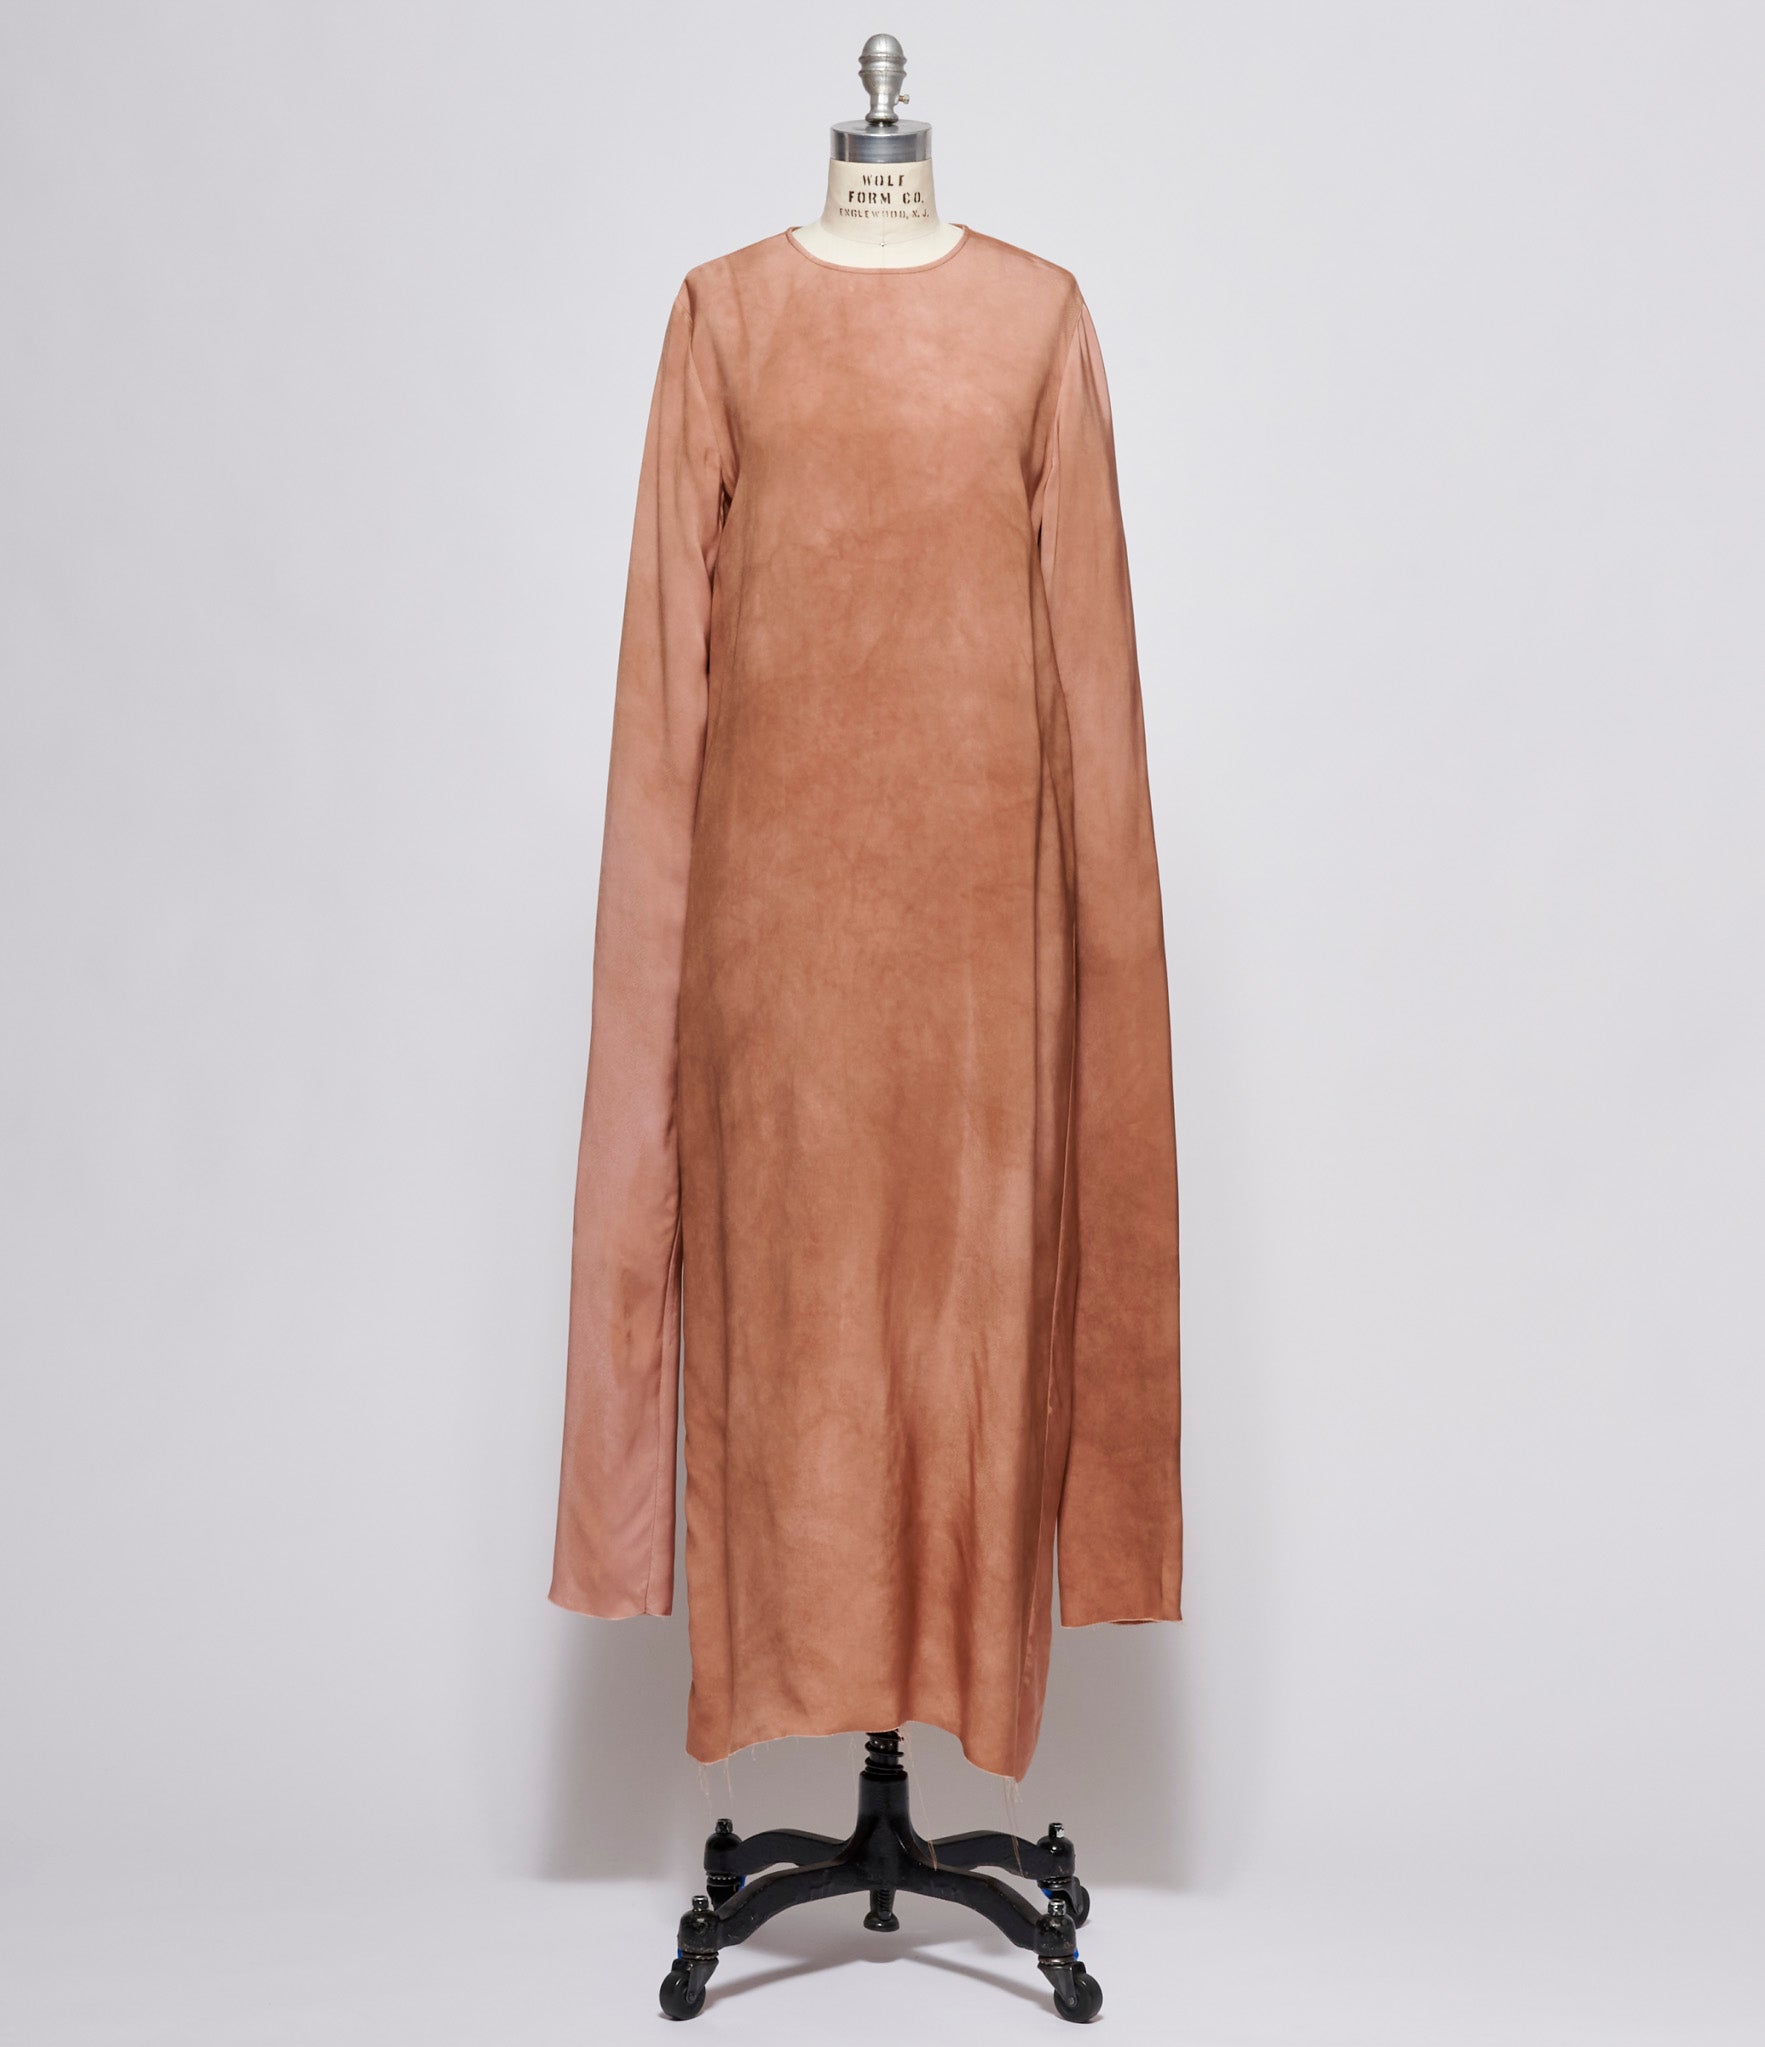 Uma Wang Aron Dress